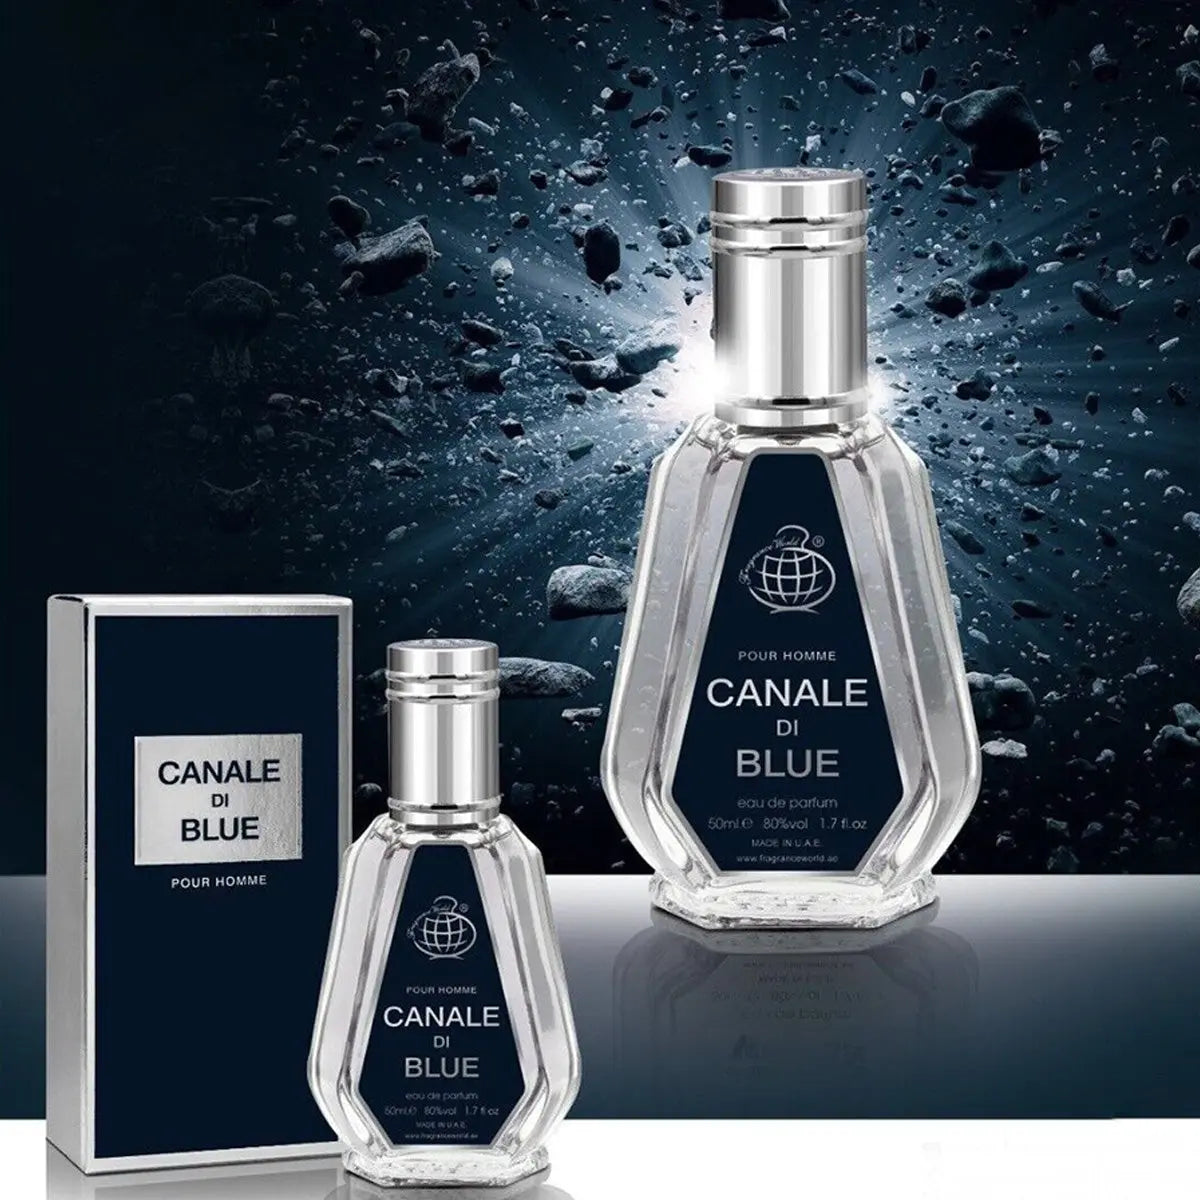 Canale Di Blue Perfume 50ml EDP Fragrance World